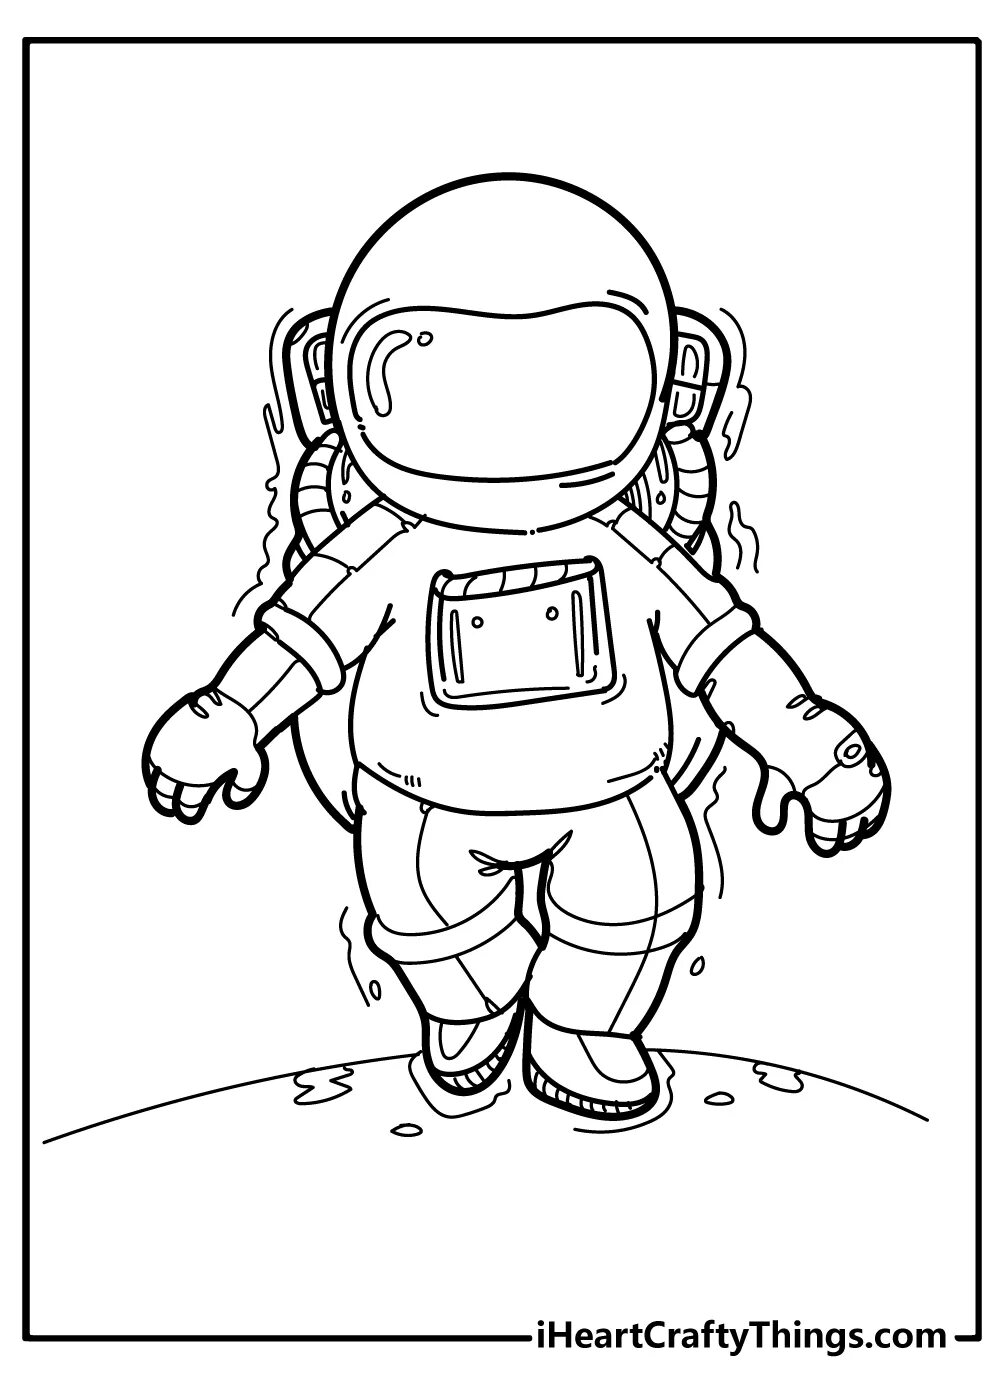 Костюм космонавта рисунок. Космонавт раскраска. Раскраска космонавт в скафандре. Скафандр раскраска для детей. Раскраска Космонавта в скафандре для детей.